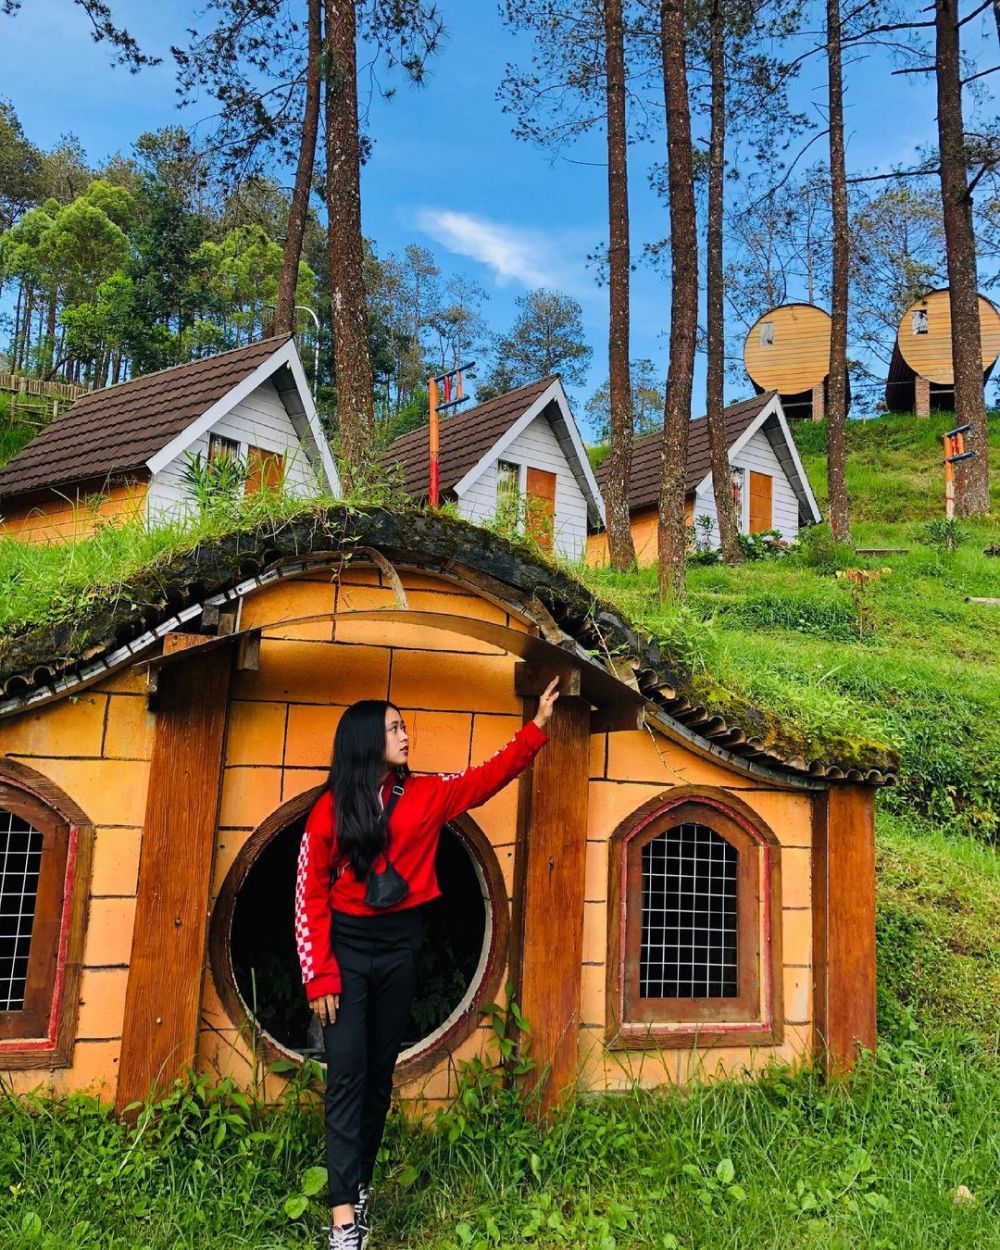 6 Rekomendasi Wisata di Tawangmangu, Kekinian nan Instagramable!